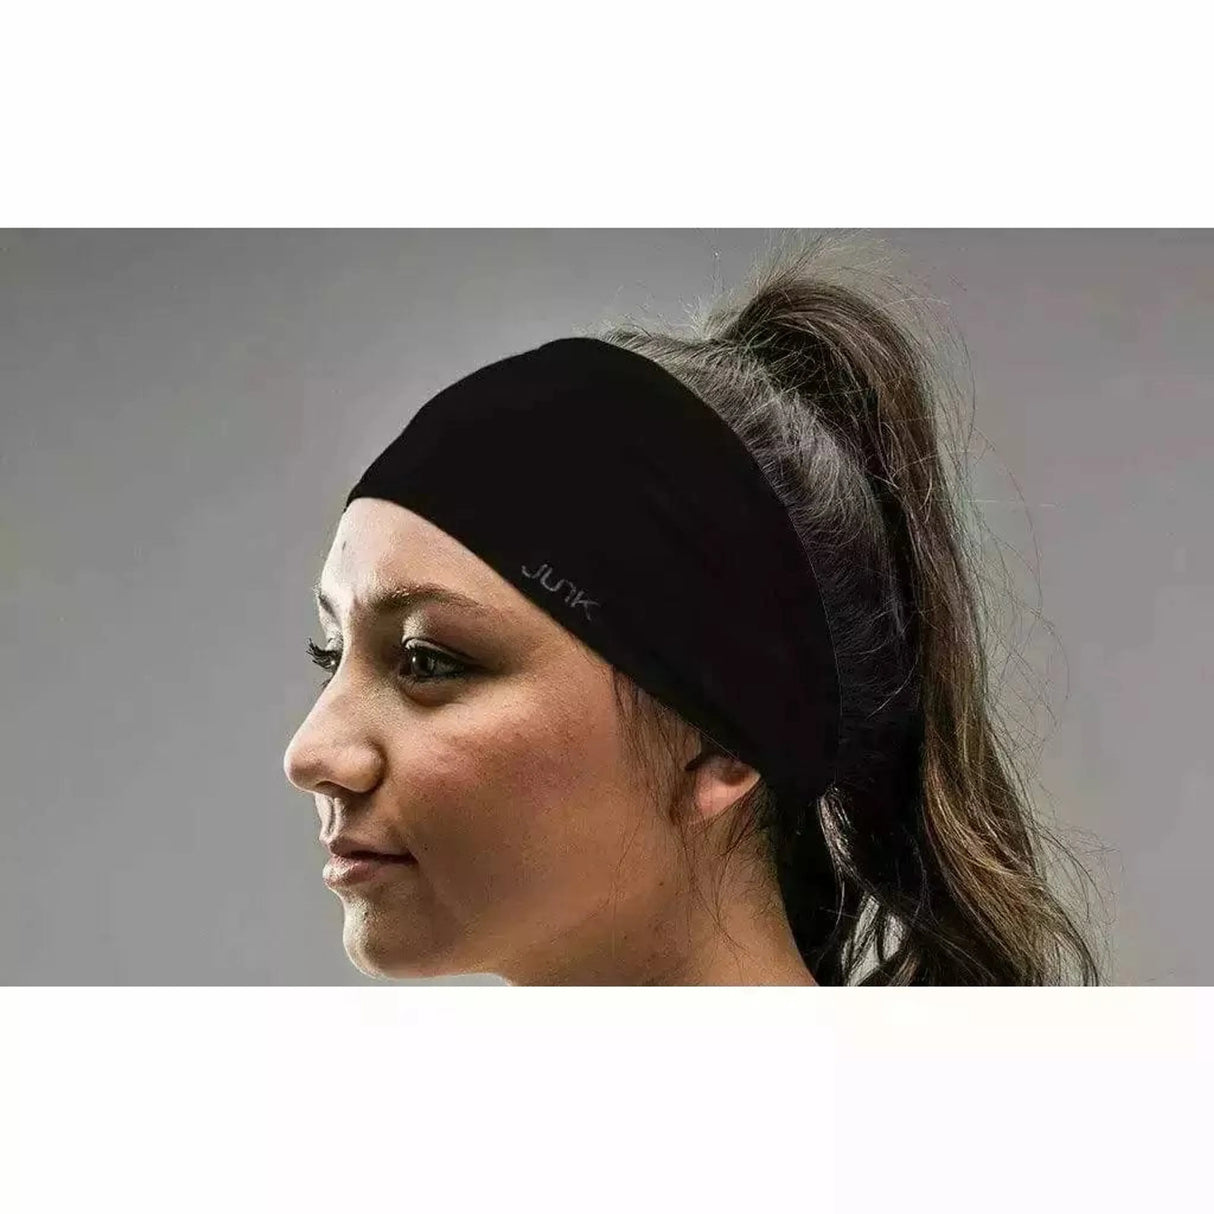 JUNK Mountain Climber Headband  -  One Size Fits Most / Tan